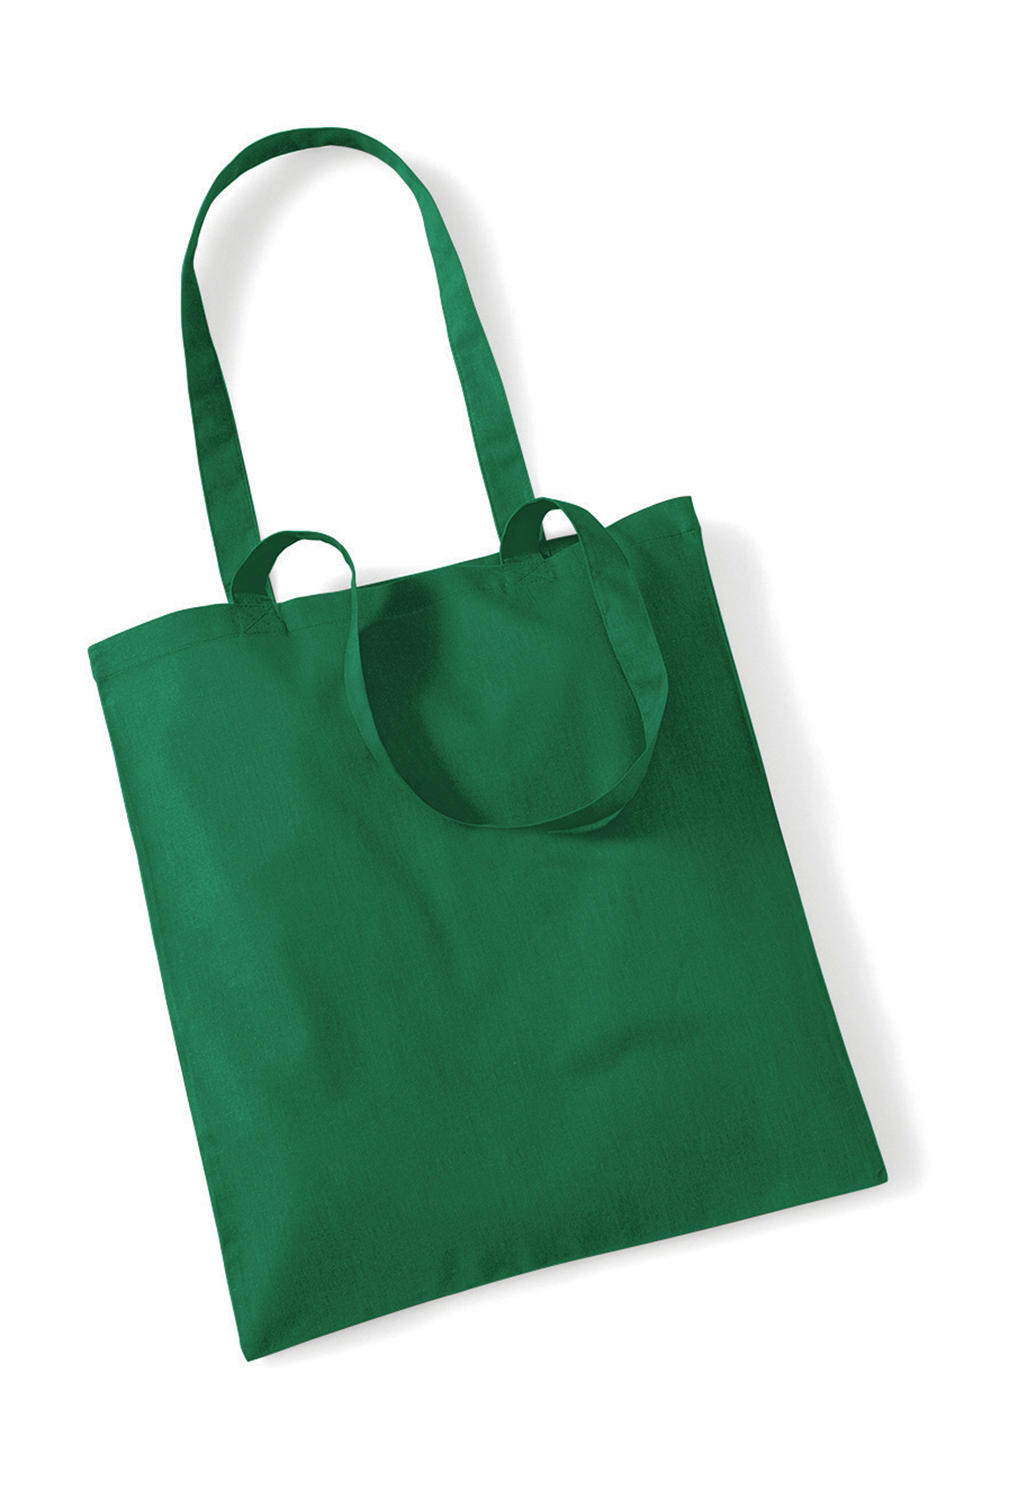 Bag for Life - Long Handles - kelly green